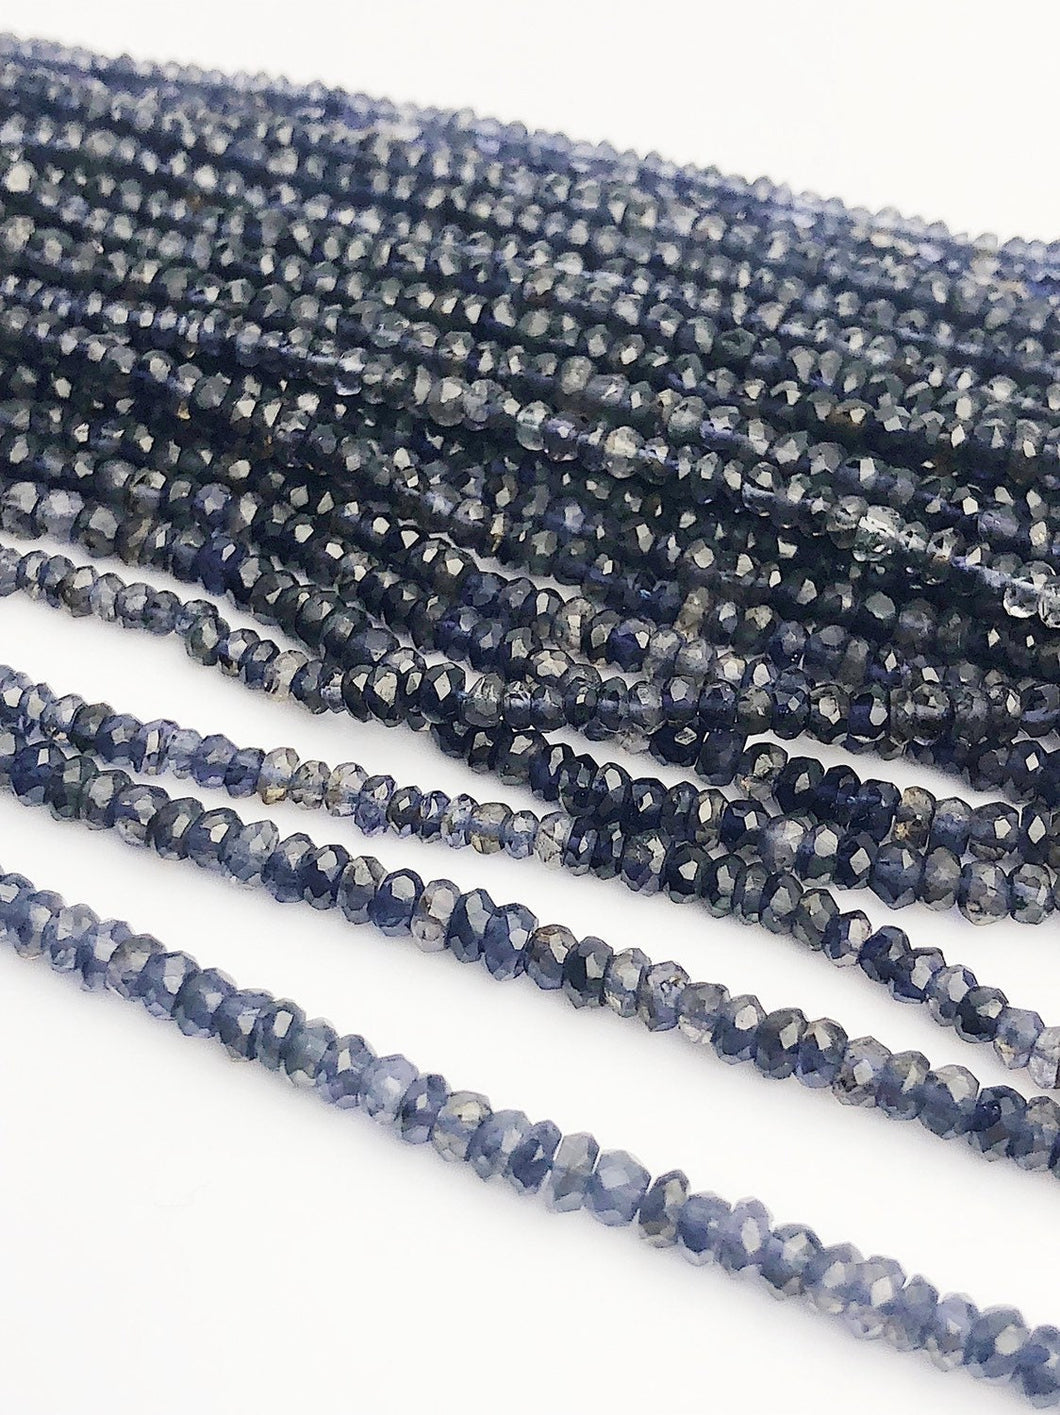 HALF OFF SALE - Lapis Gemstone Beads, Full Strand, Semi Precious Gemstone, 13